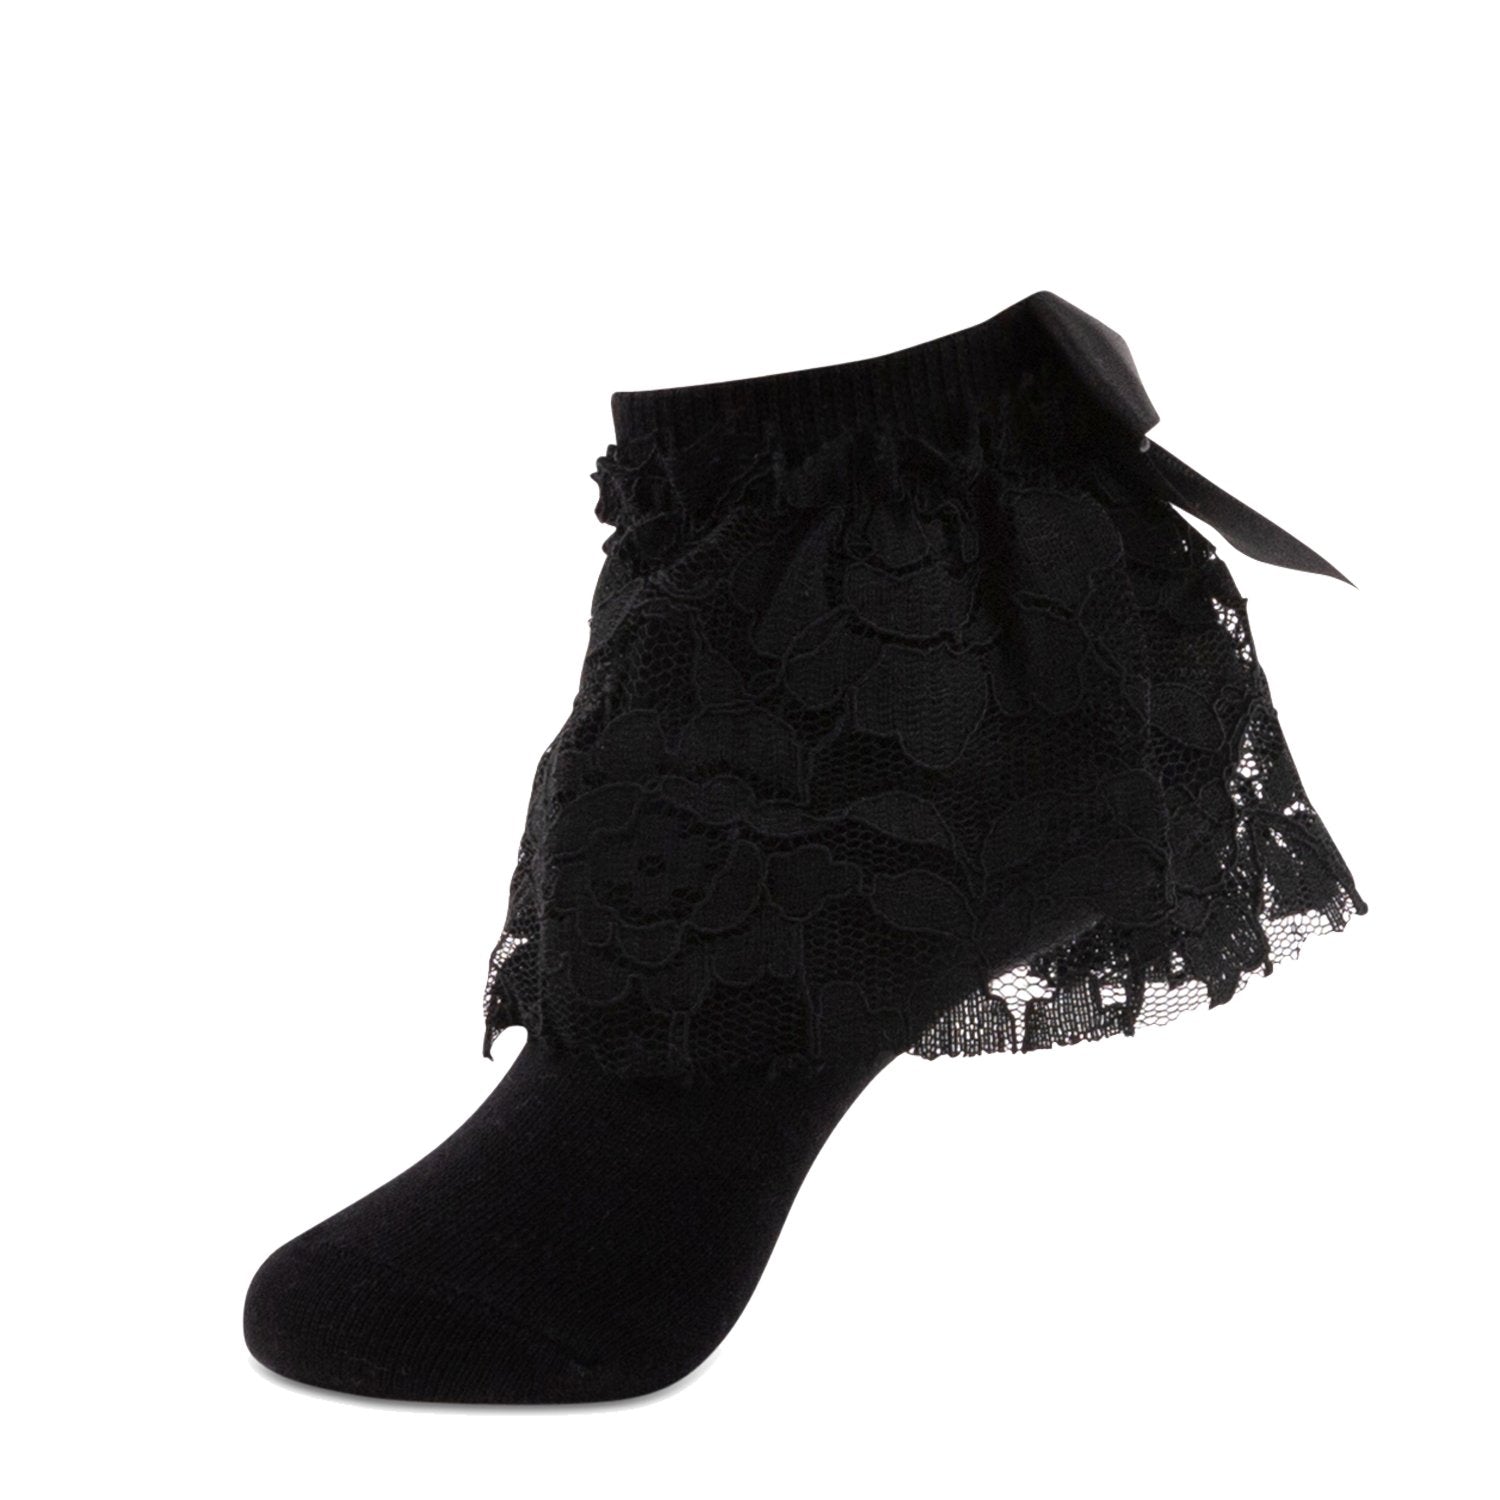 jrp sock girls black floral lace ruffle anklet sock